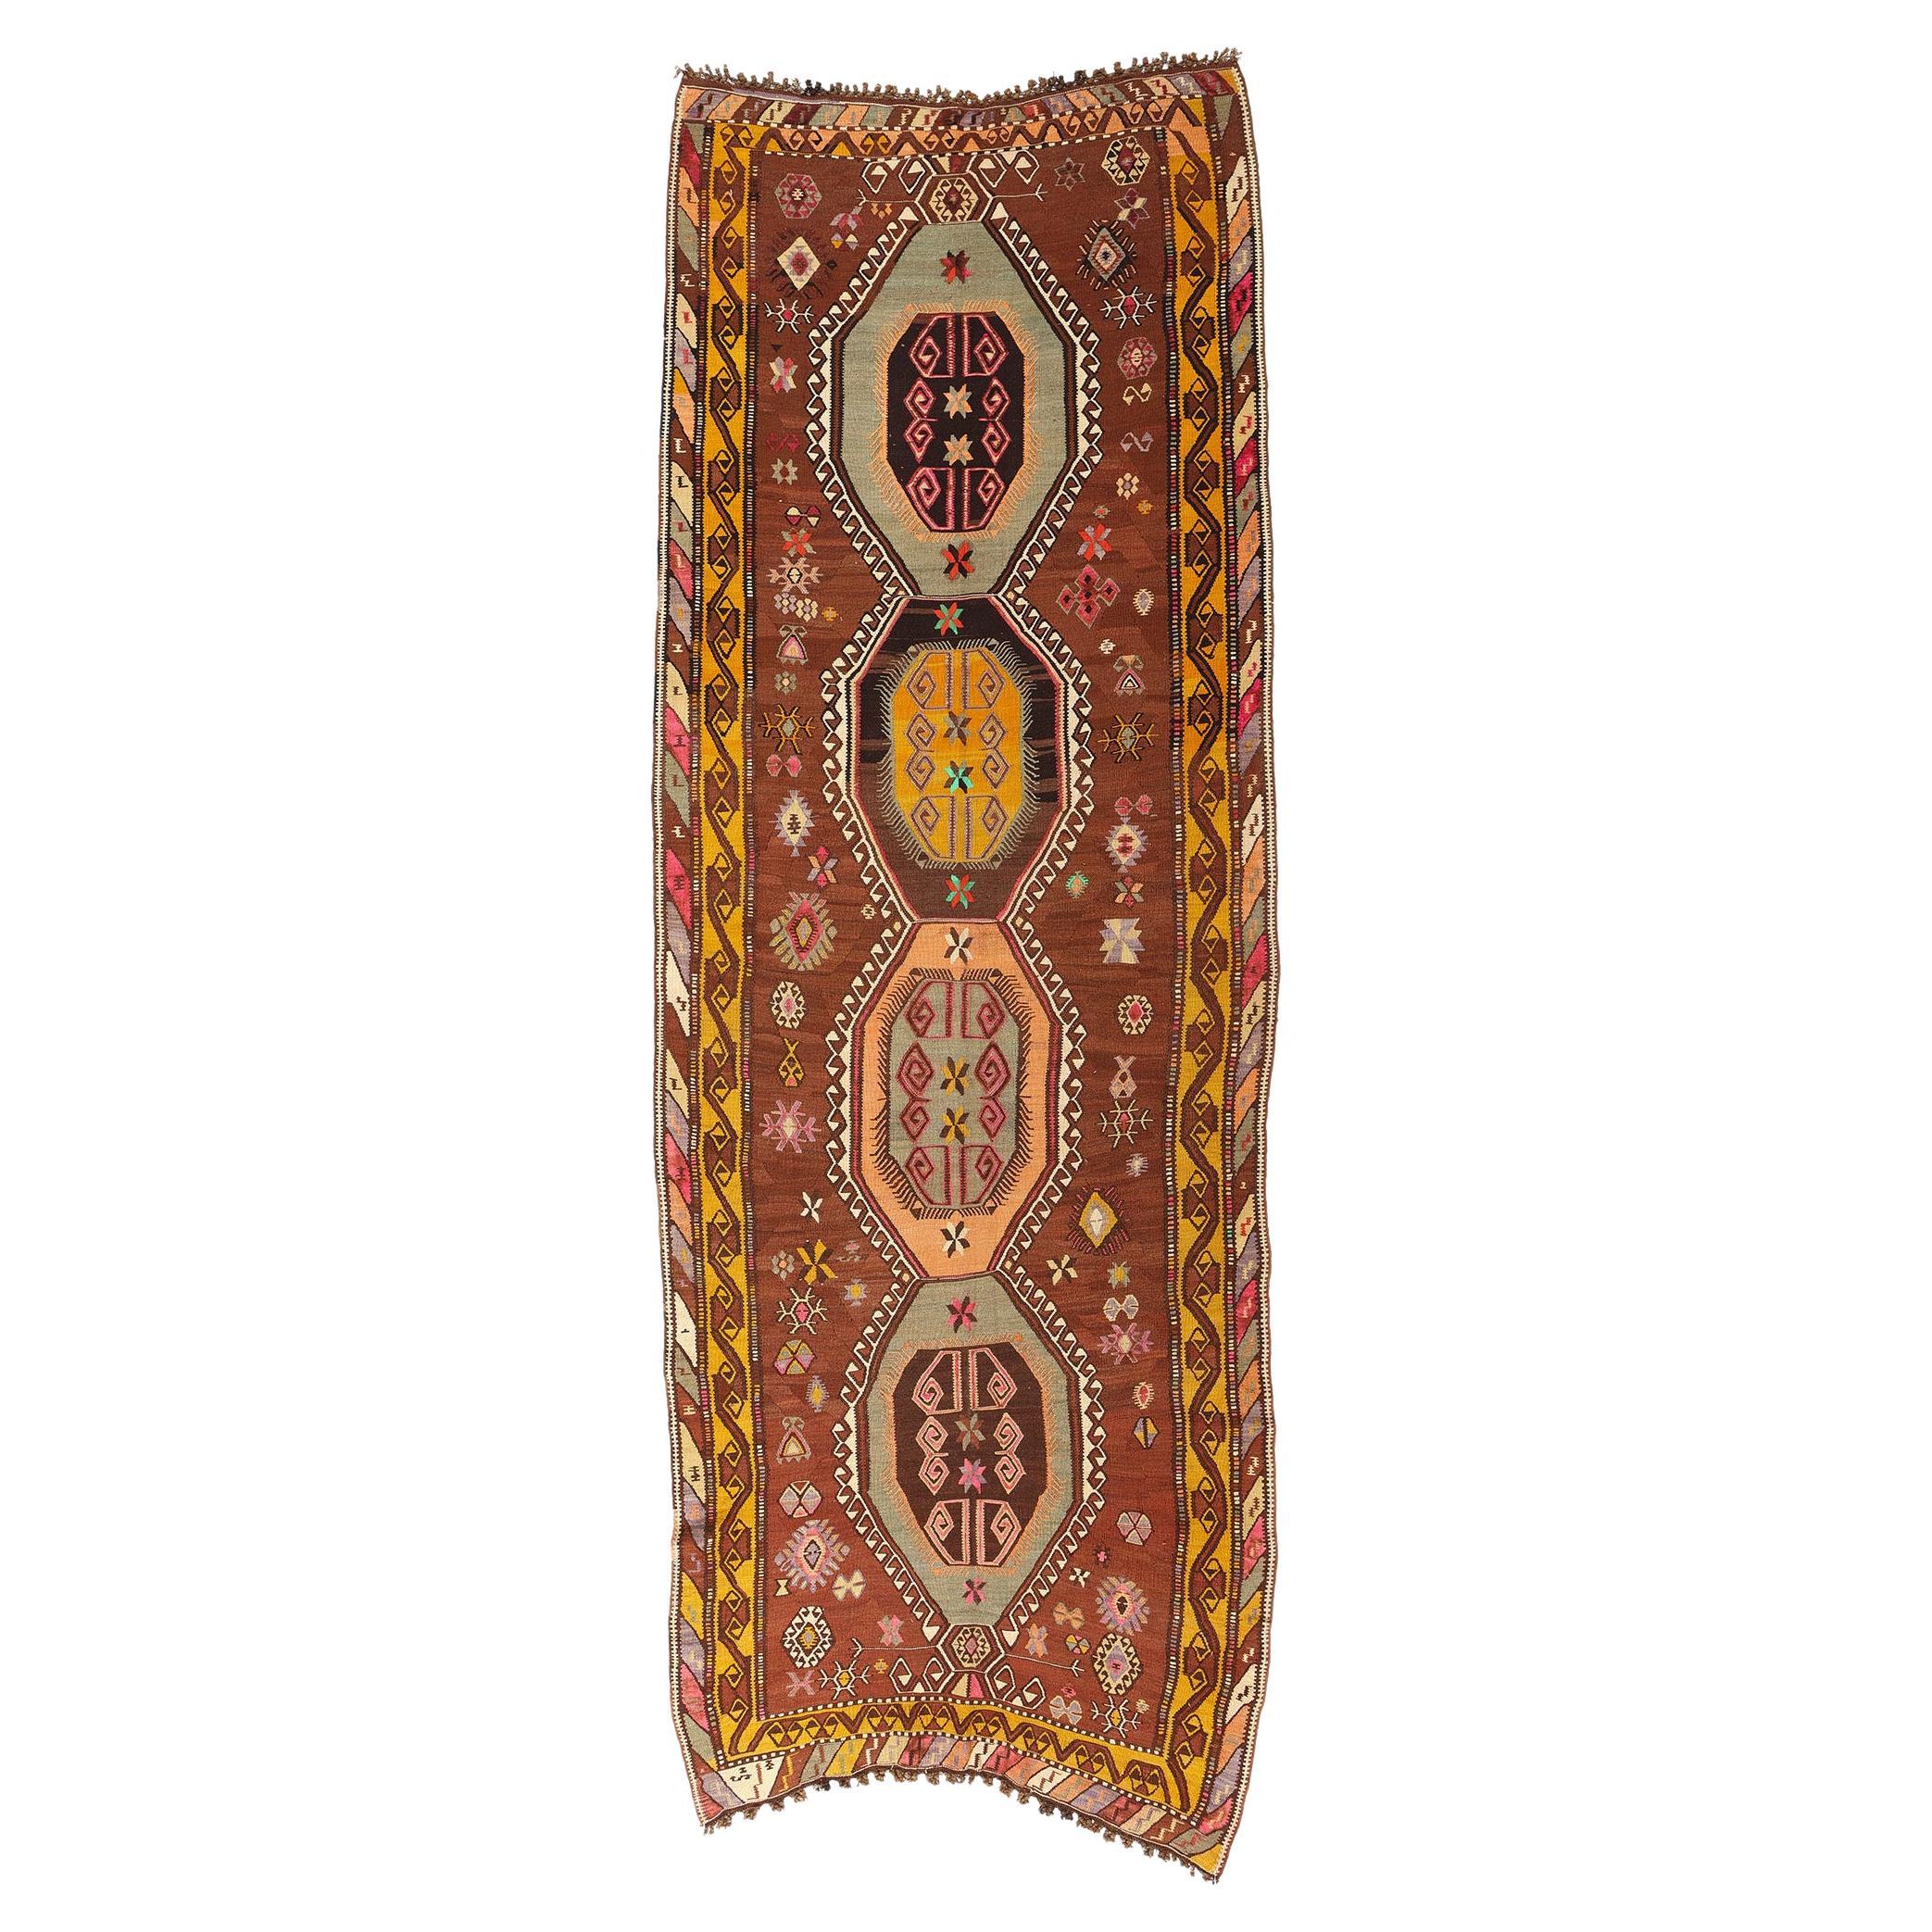  Vintage Turkish Kilim Rug, Colorful Bohemian Meets Tailor-Made Elegance